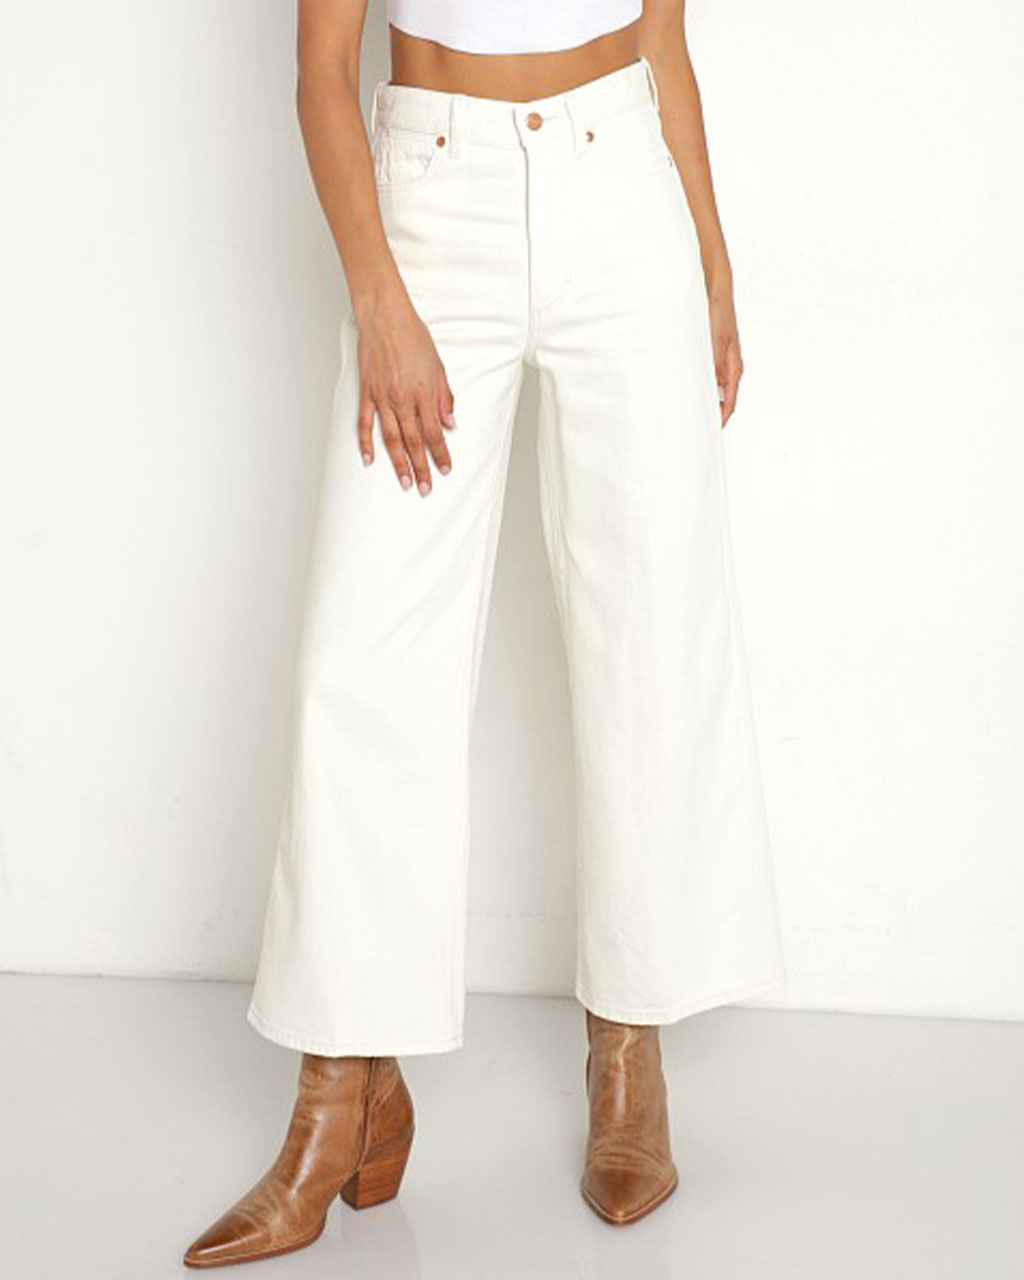 Worldwide High Rise Crop Jeans - Vintage White – ban.do